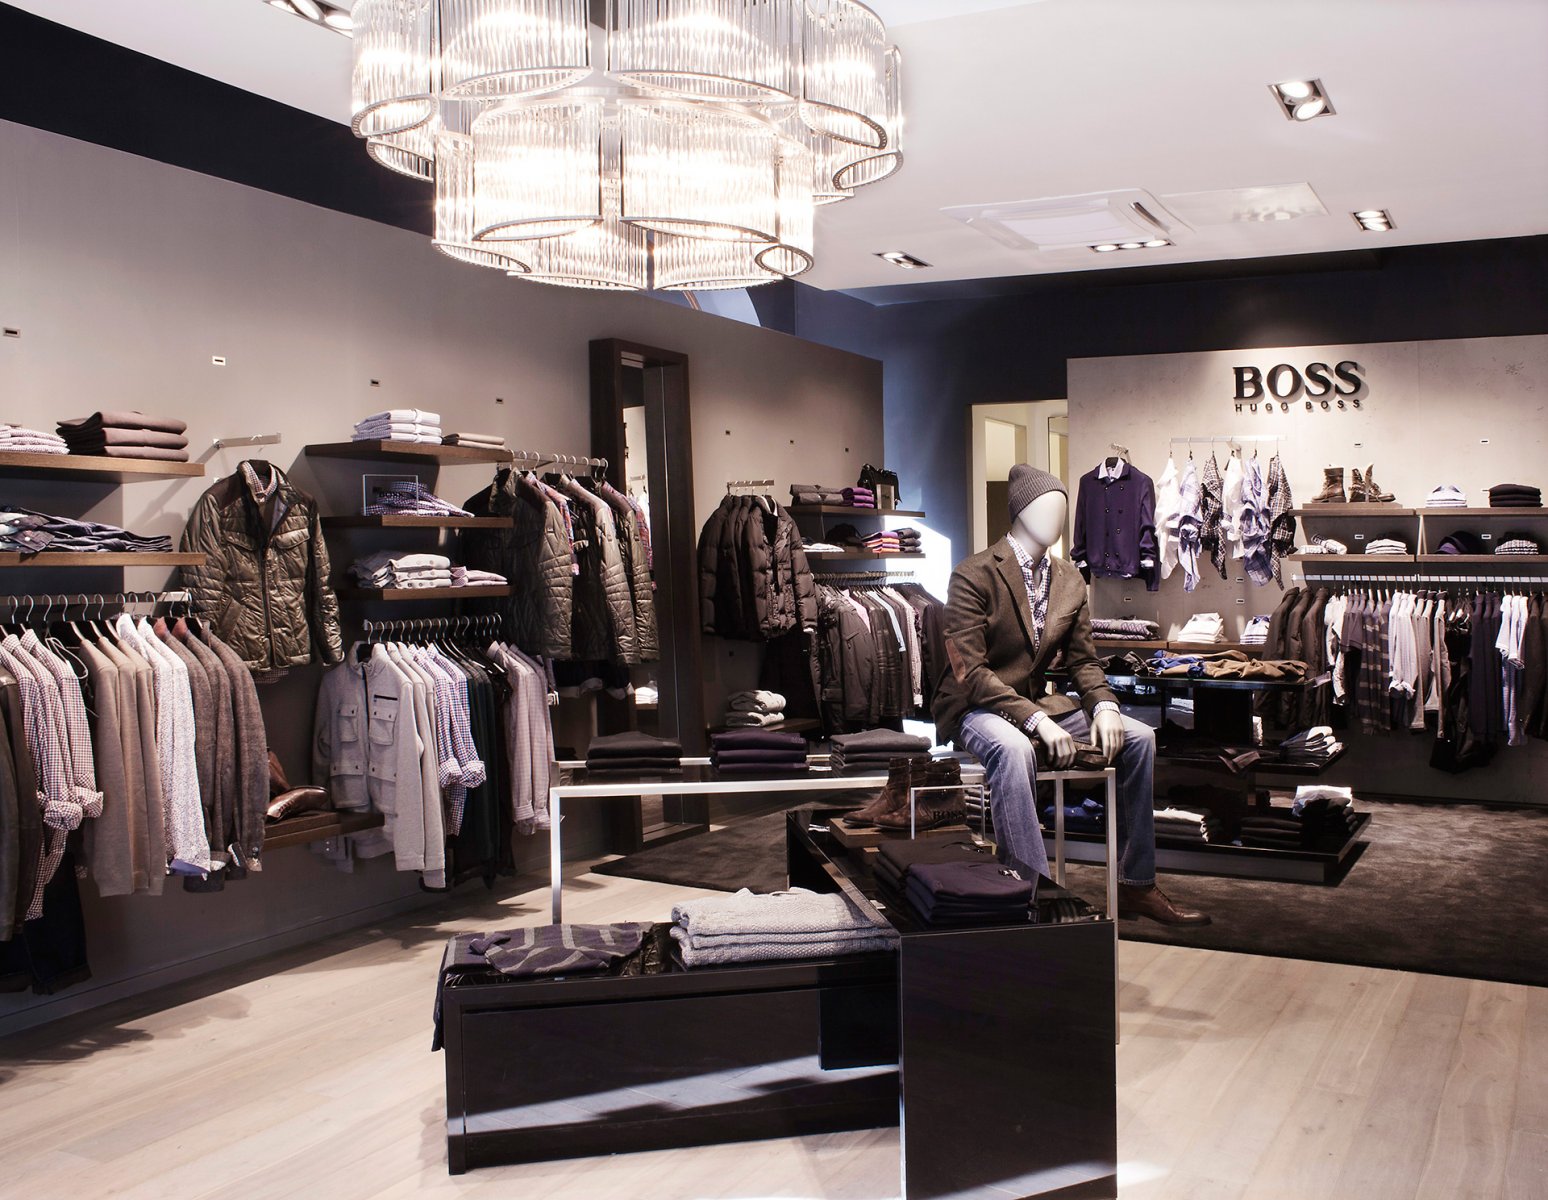 BOSS Store Stockholm - Hollin Radoske Architects